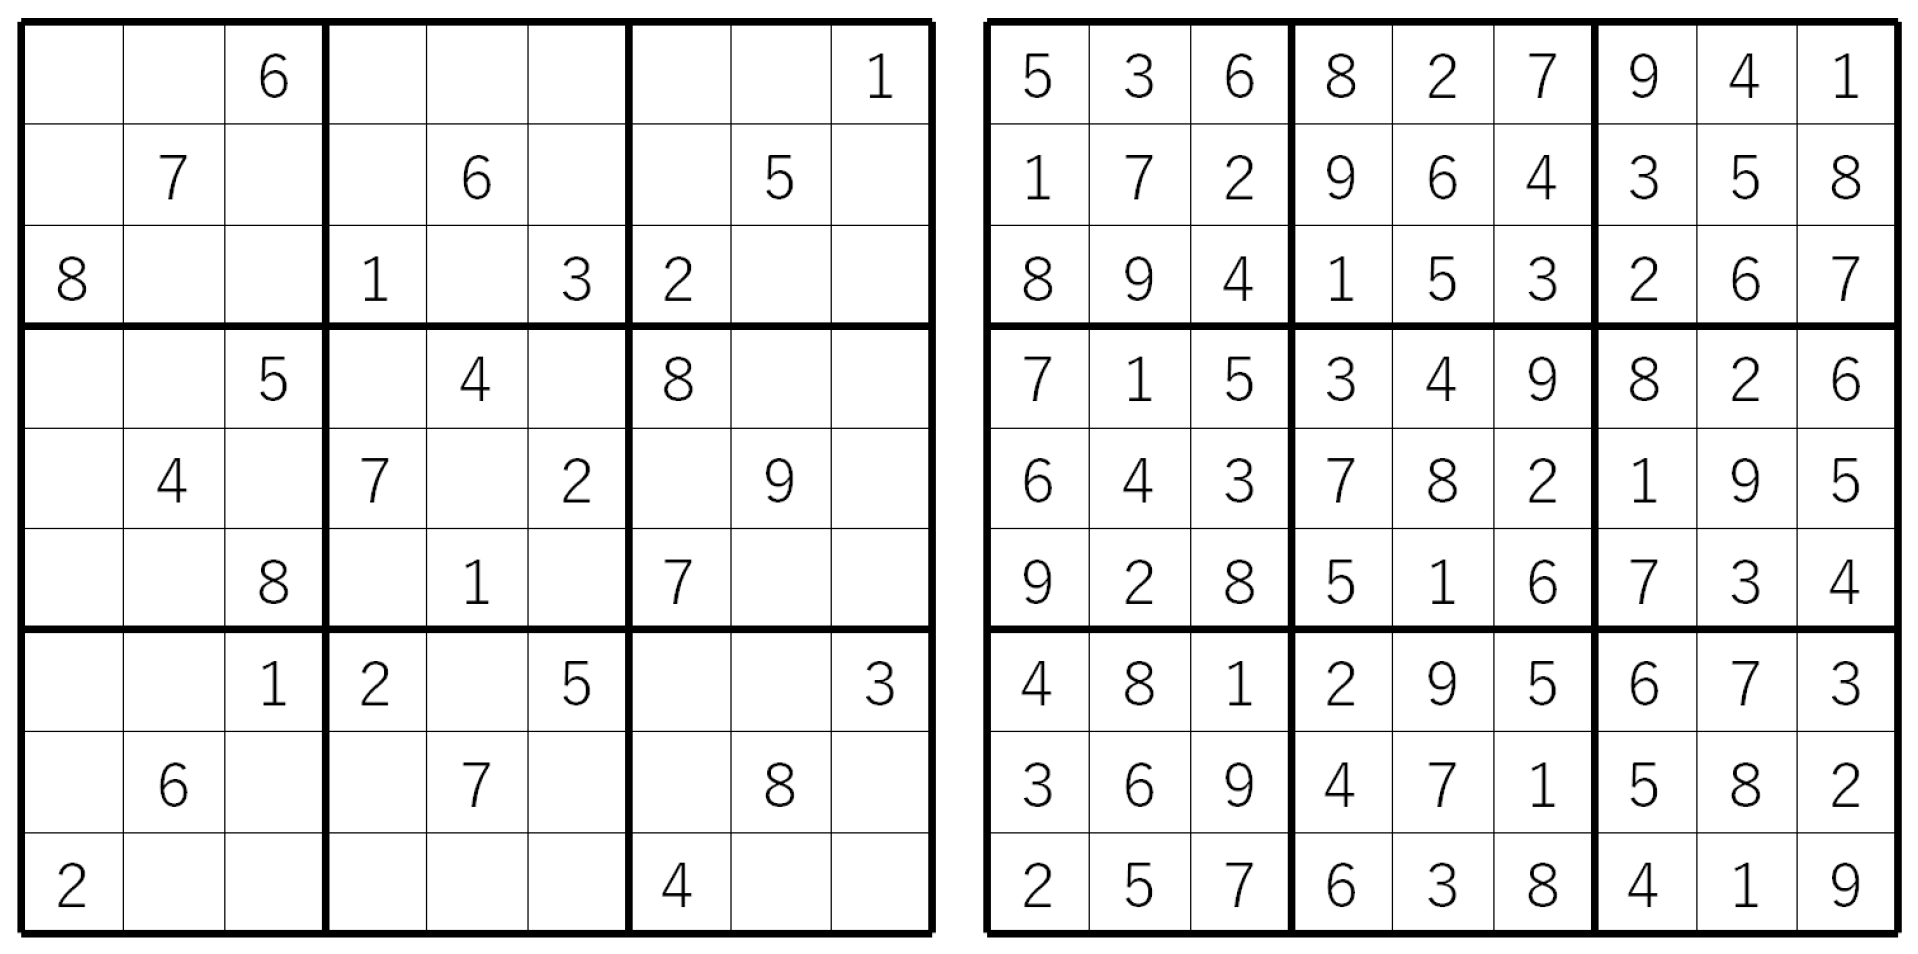 Intermediate Sudoku Solving Techniques Part 3: Solving from